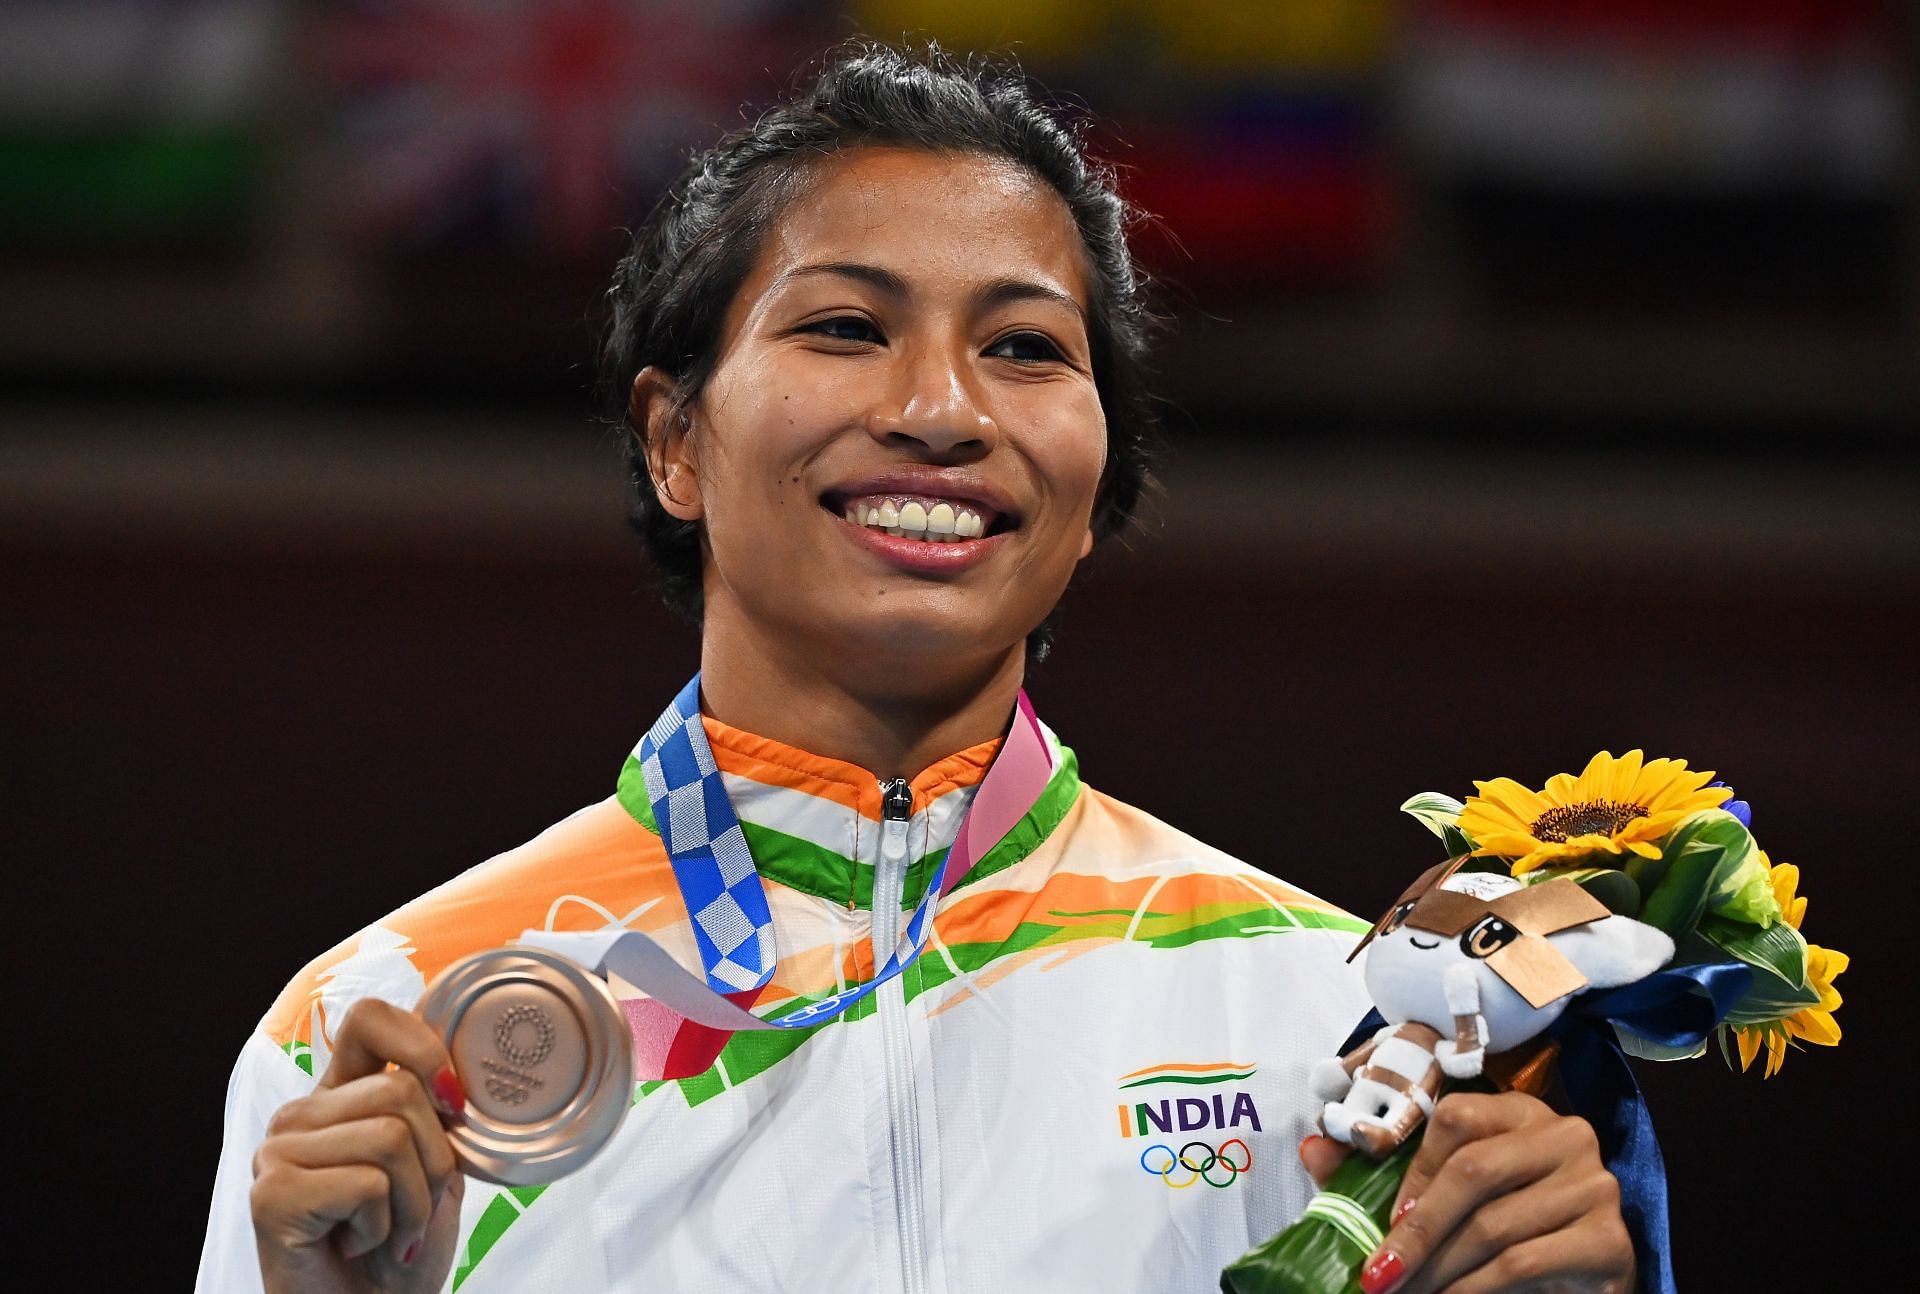 Lovlina Borgohain clinched the bronze medal at Tokyo Olympics 2020